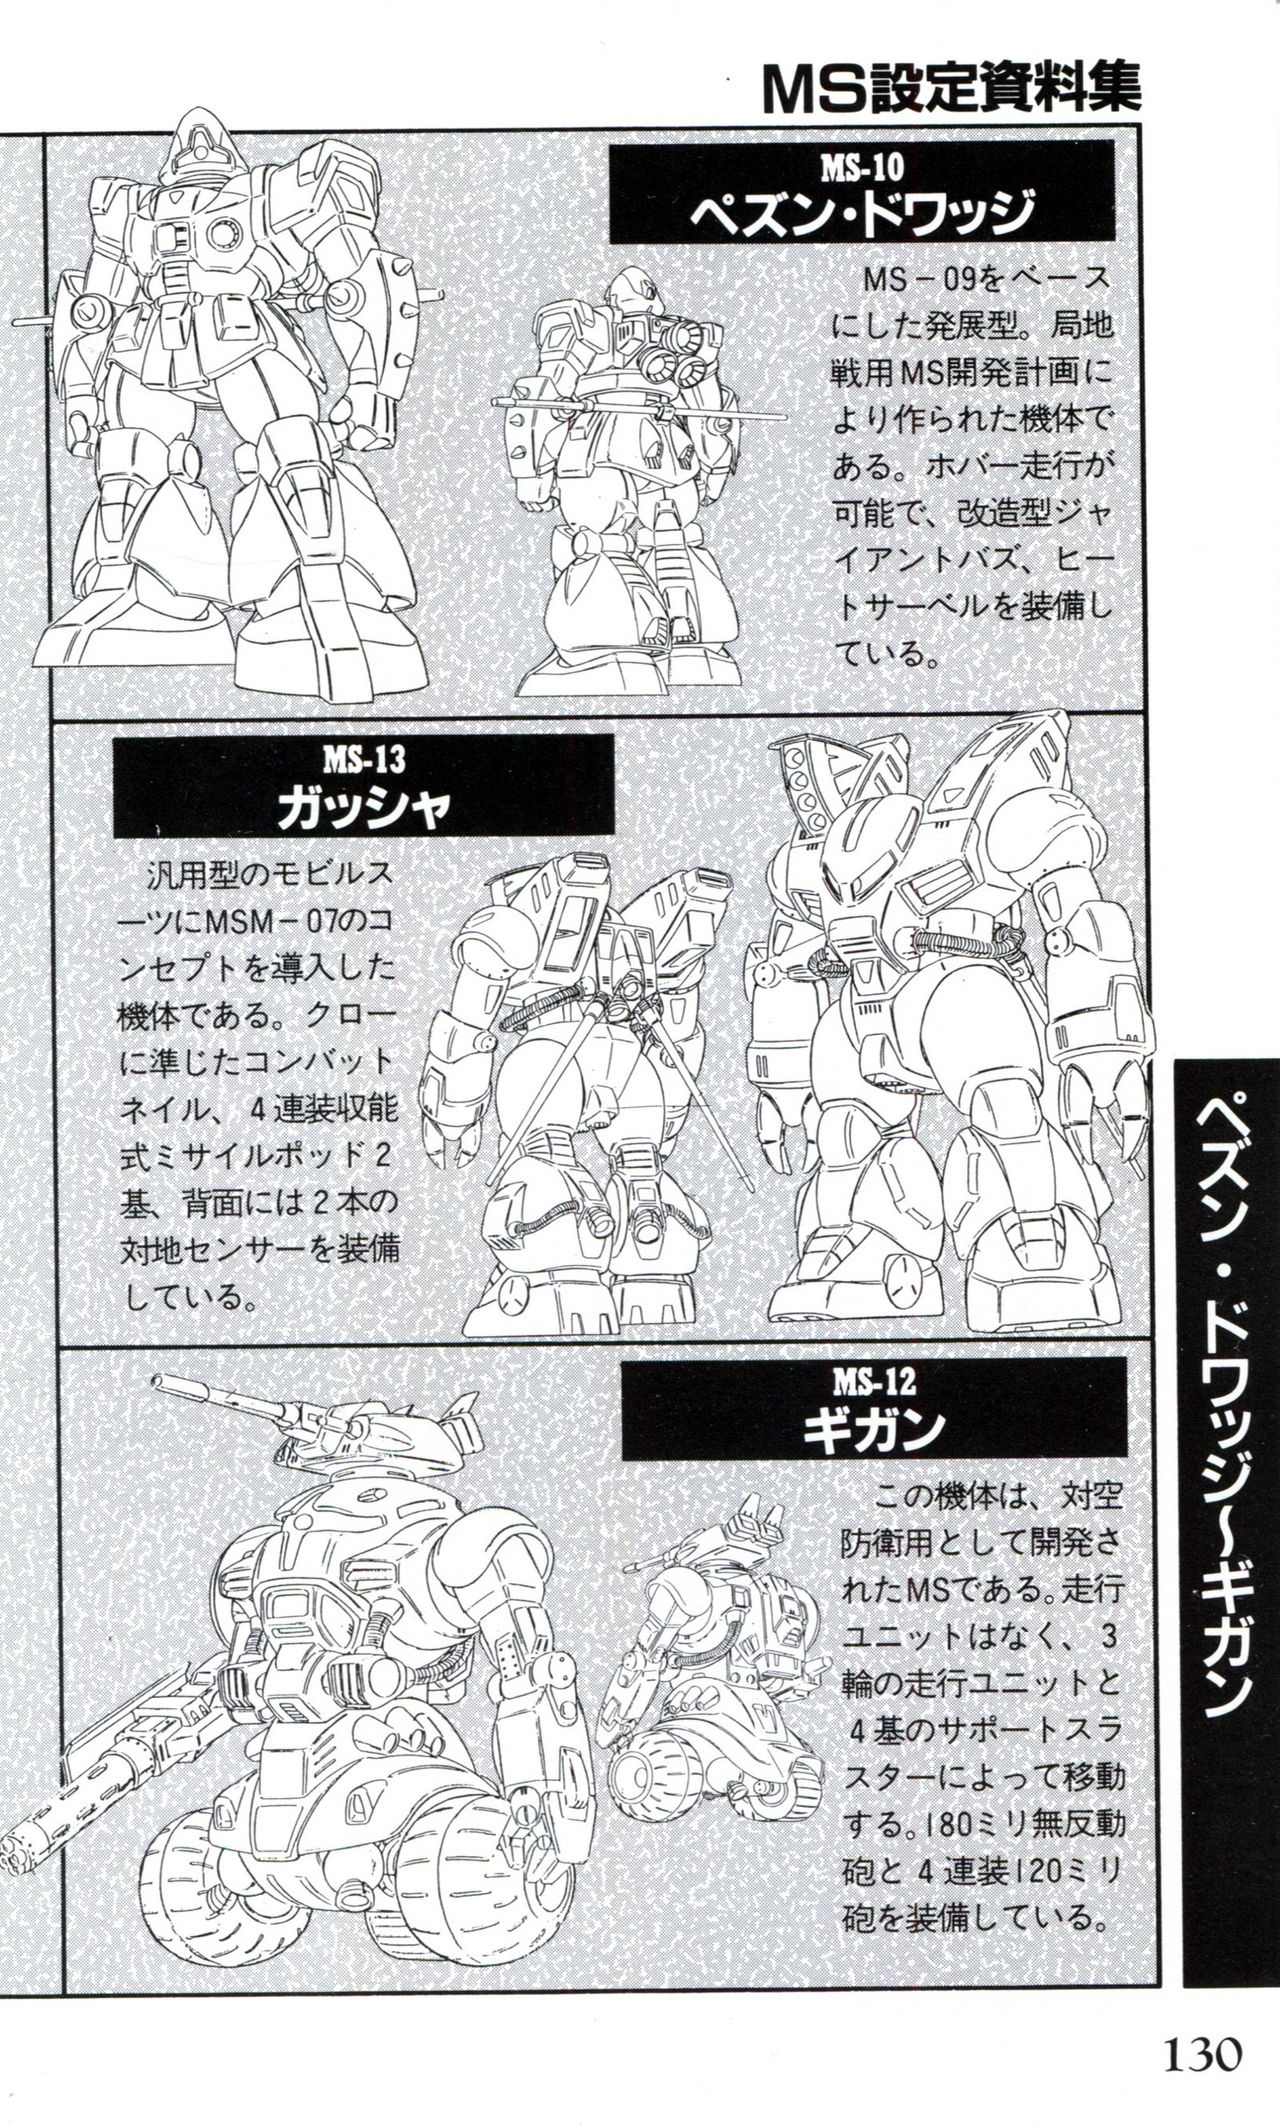 Mobile Suit Gundam U.C. Box MS Gundam Encyclopedia NO.01 - Mobile Suit Gundam 129